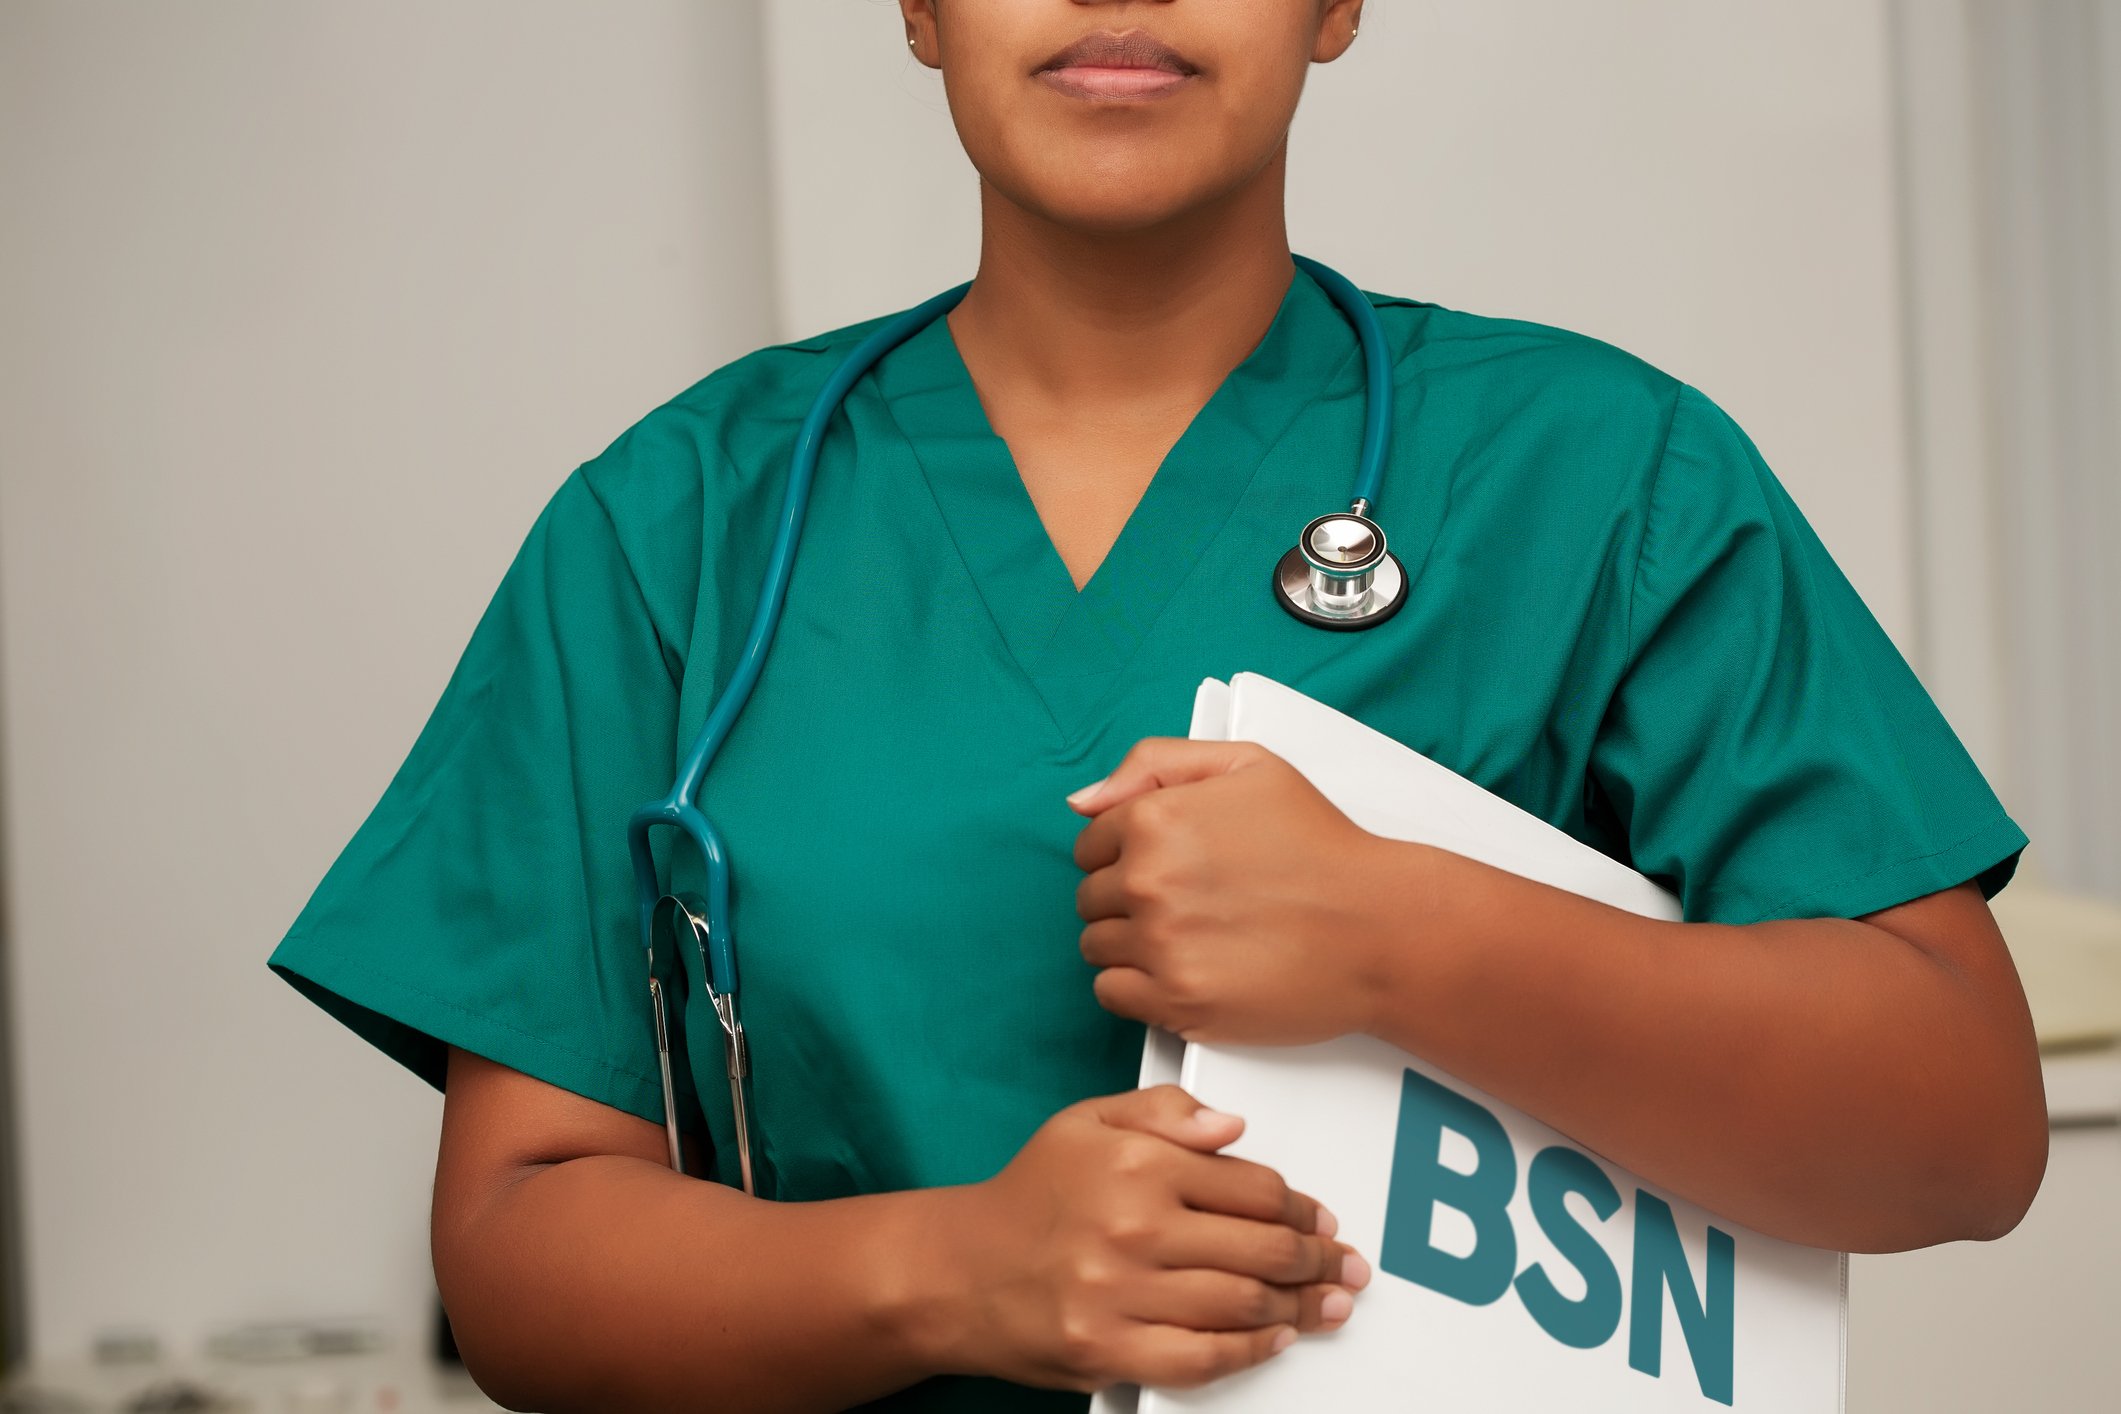 Meet Moxi, the newest nurse assistant of Trinity Michigan medical